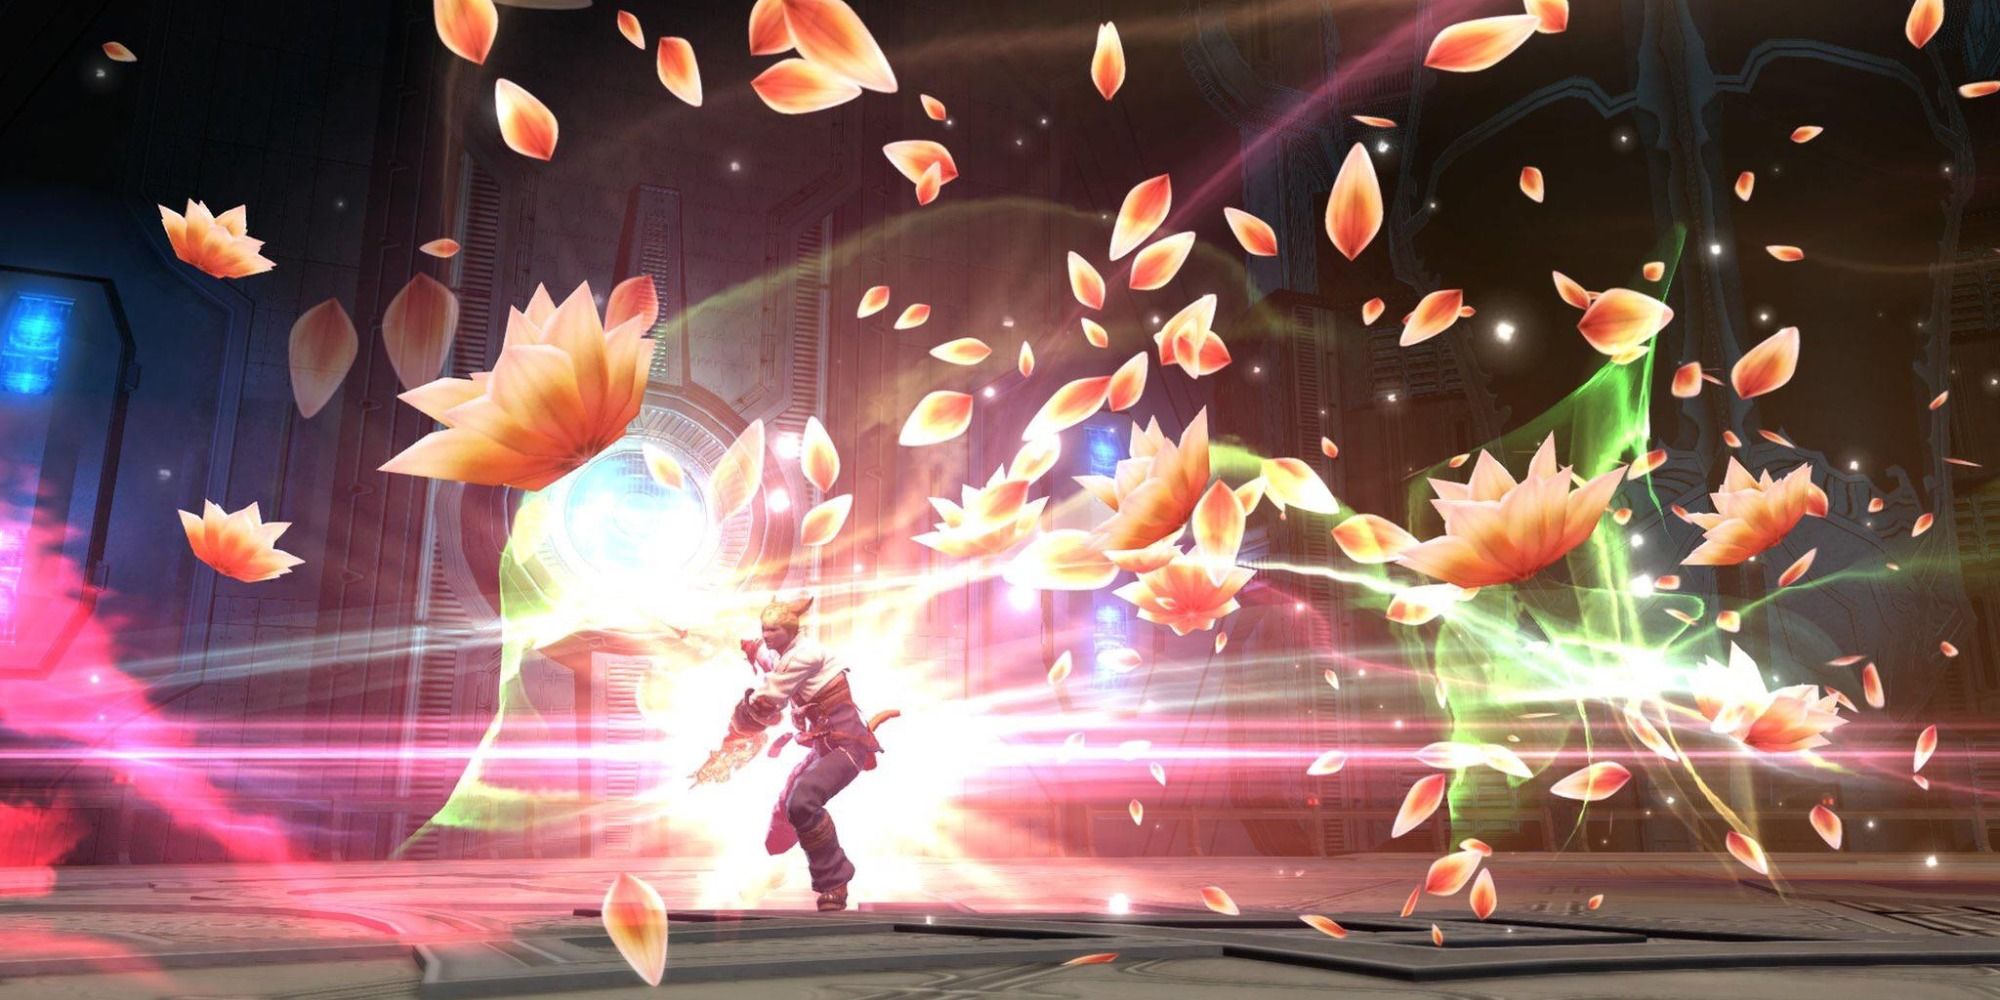 A Dancer using an attack in Final Fantasy 14